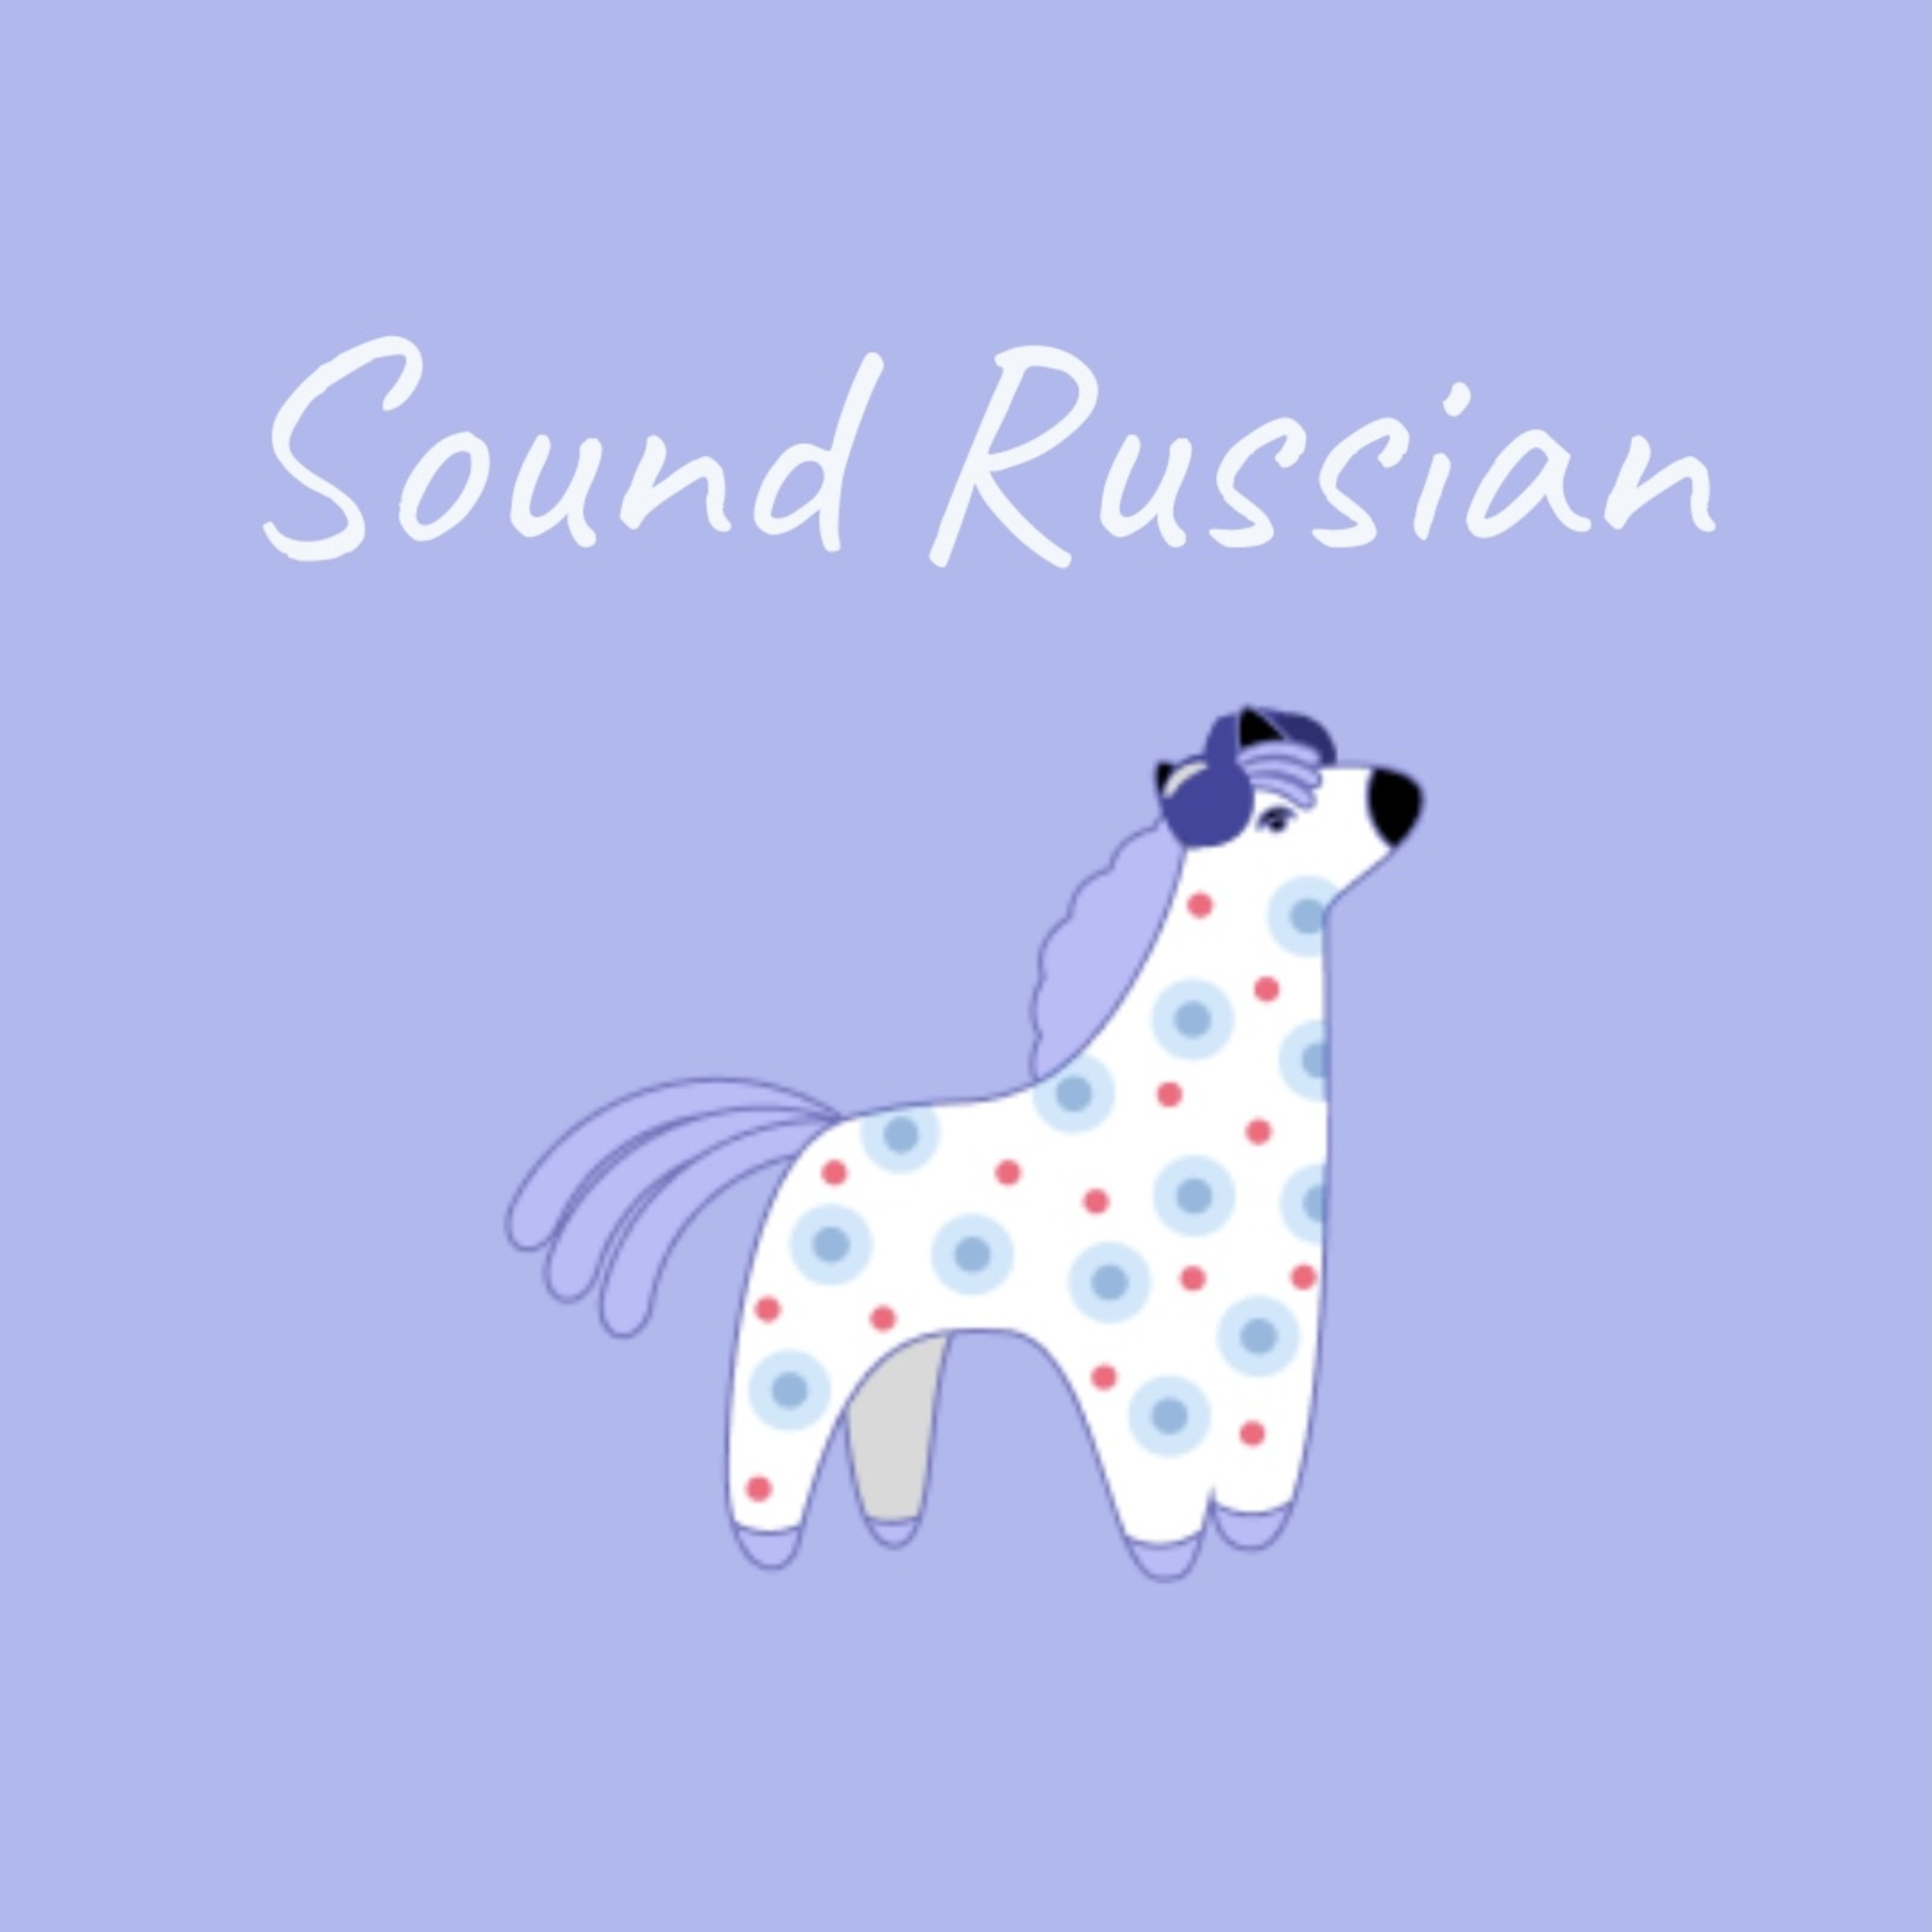 Sound Russian